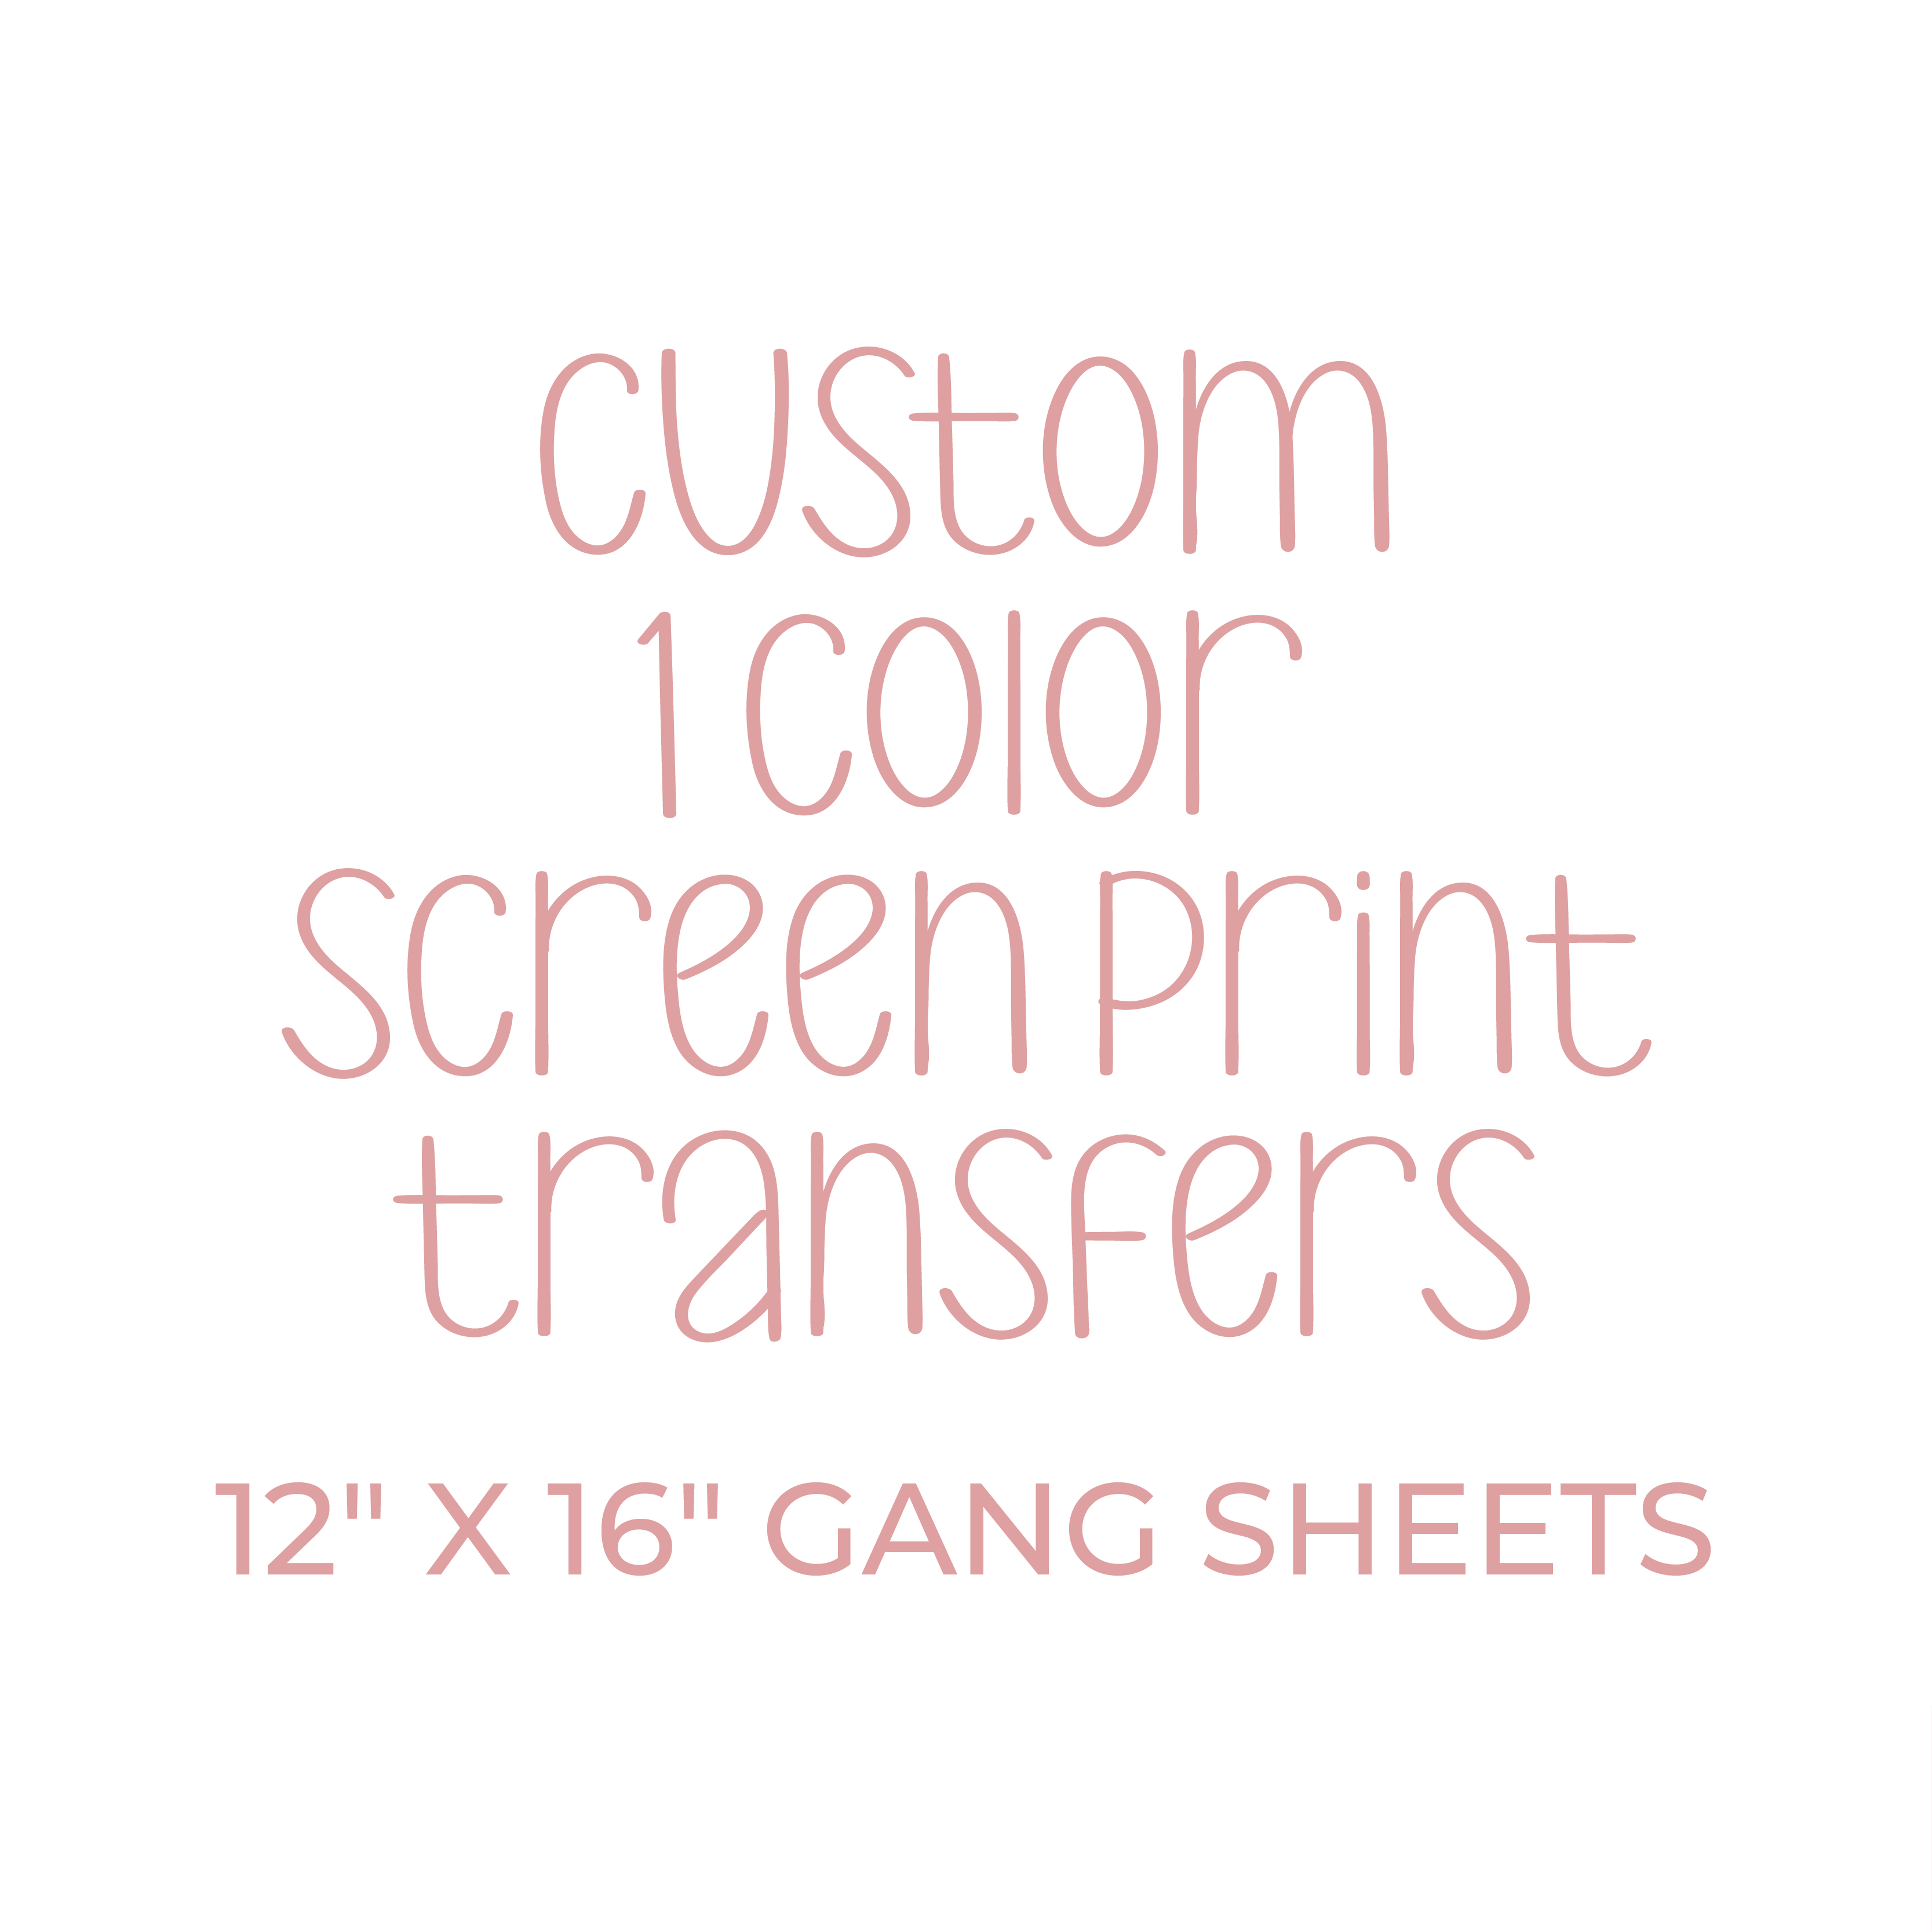 Custom 1 Color Screen Print Transfer